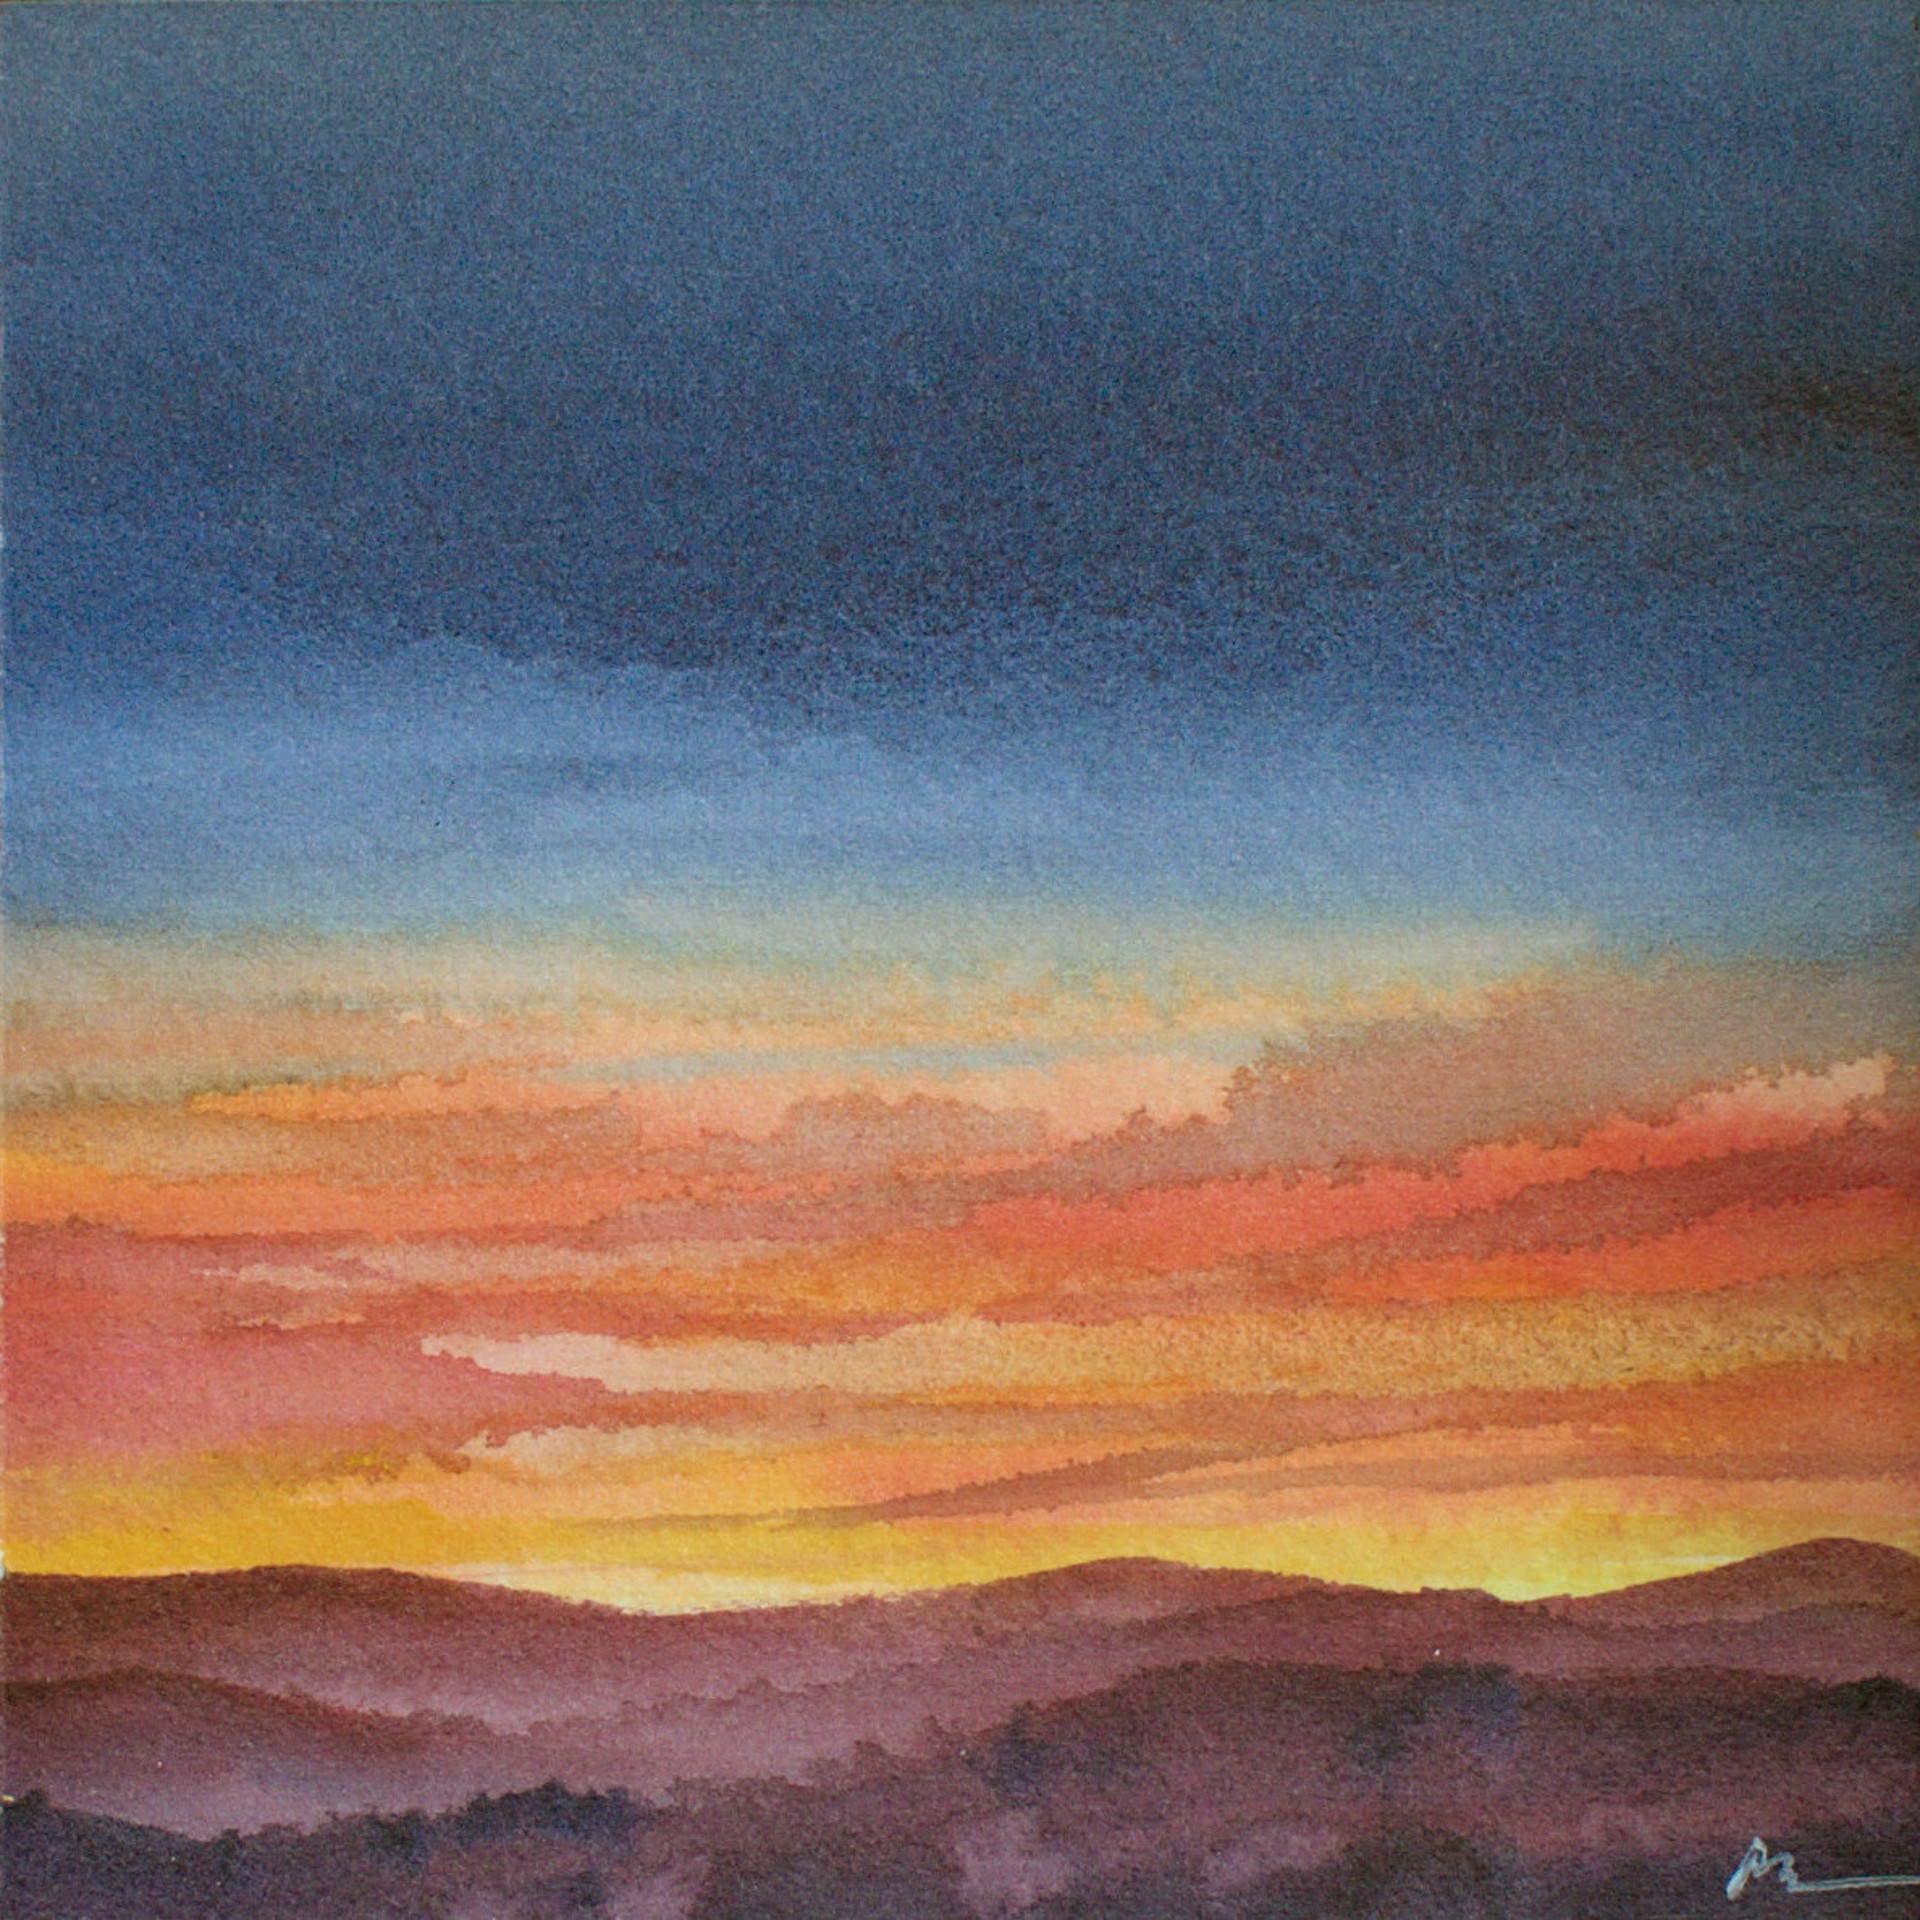 Sunrise # 4 by Bronwen McCormick